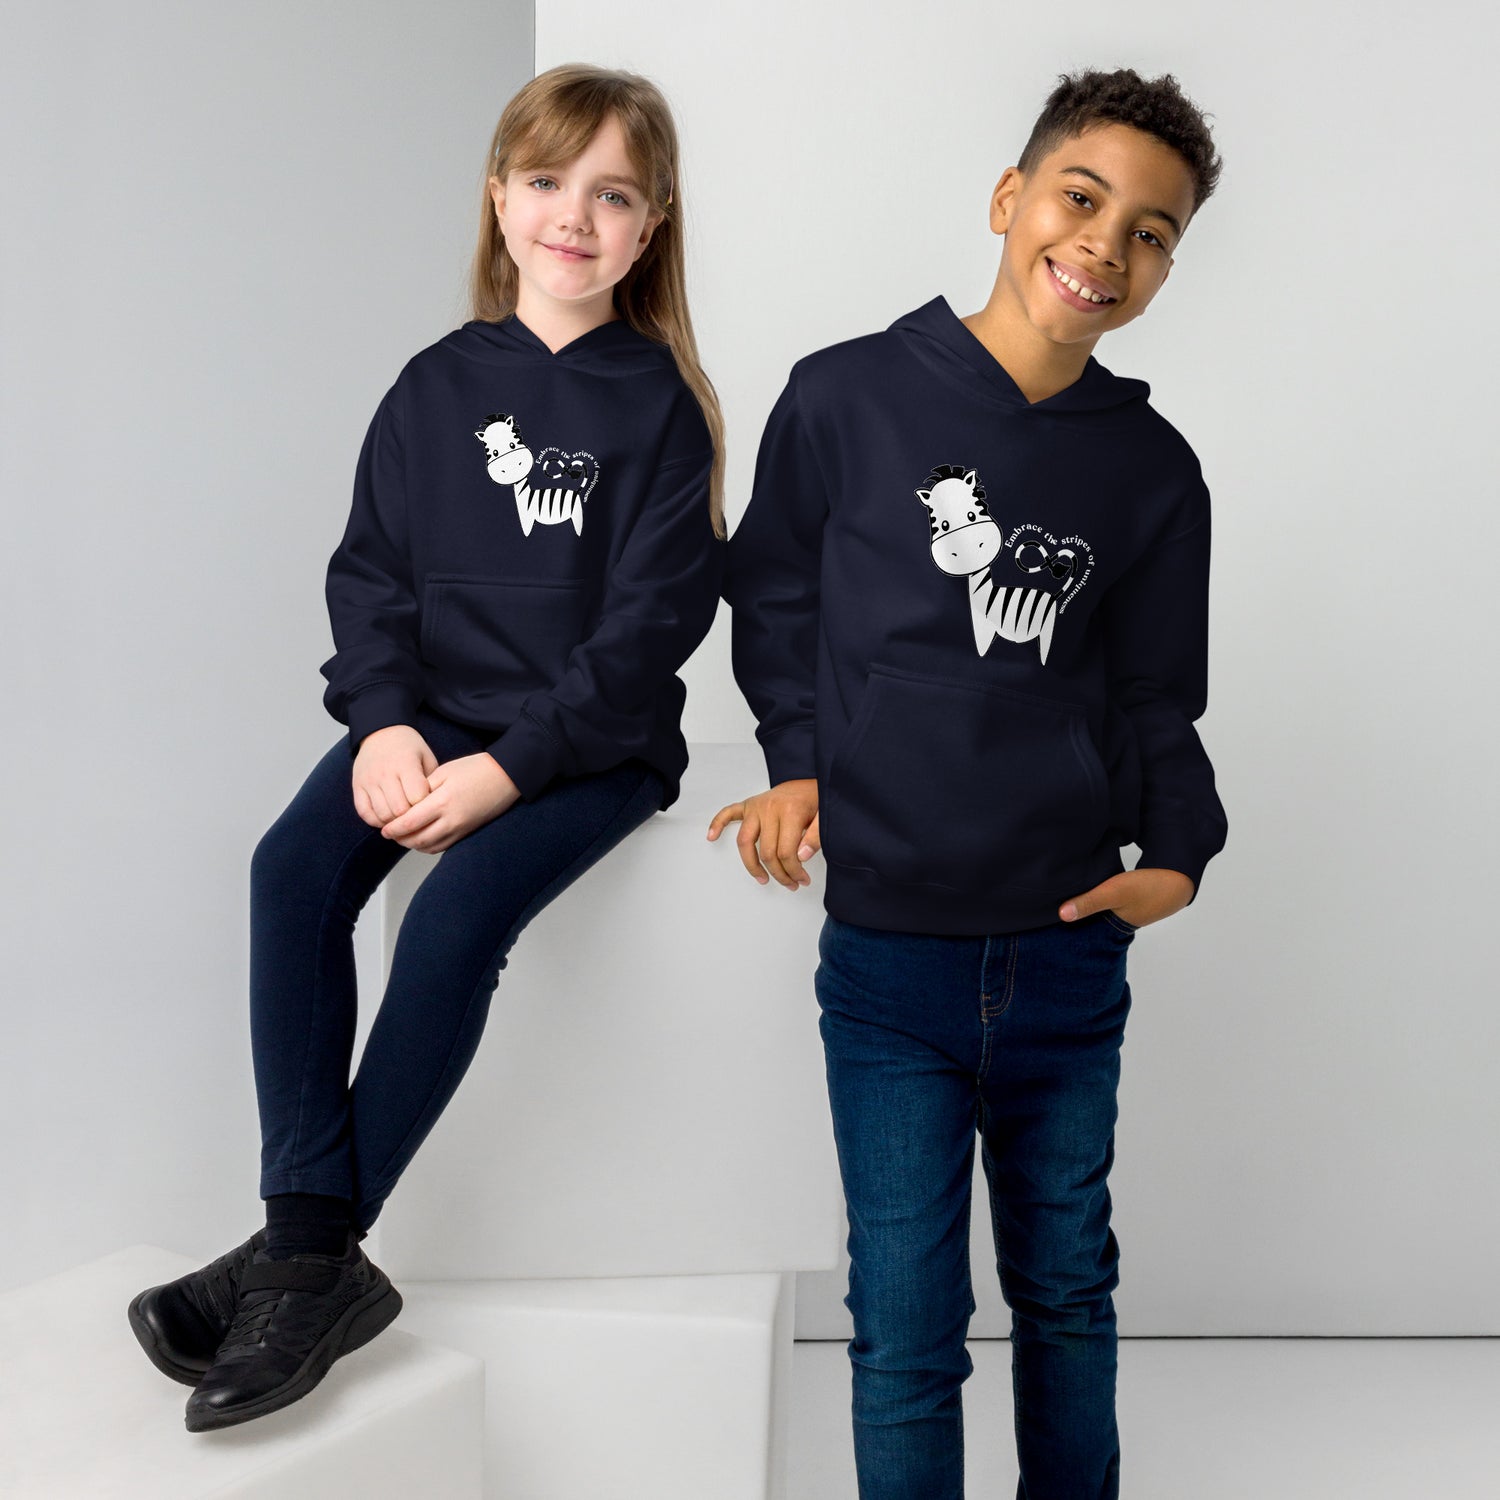 Indigo Kidswear hoodie featuring a zebra print design. 